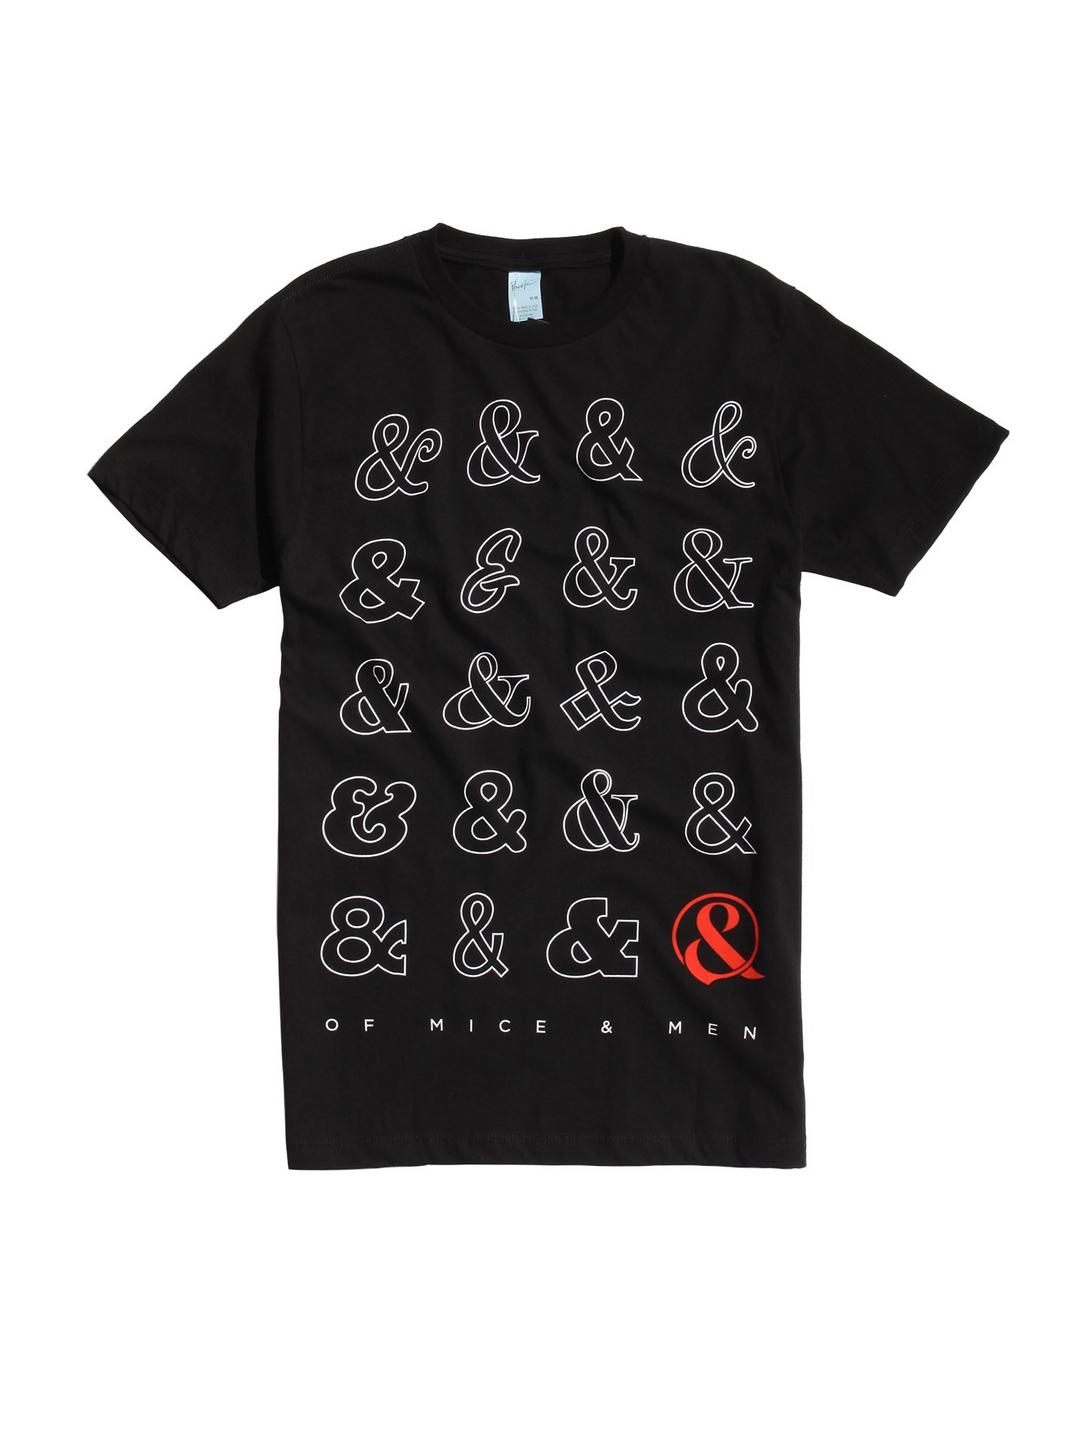 Of Mice & Men Ampersand T-Shirt, CHARCOAL, hi-res